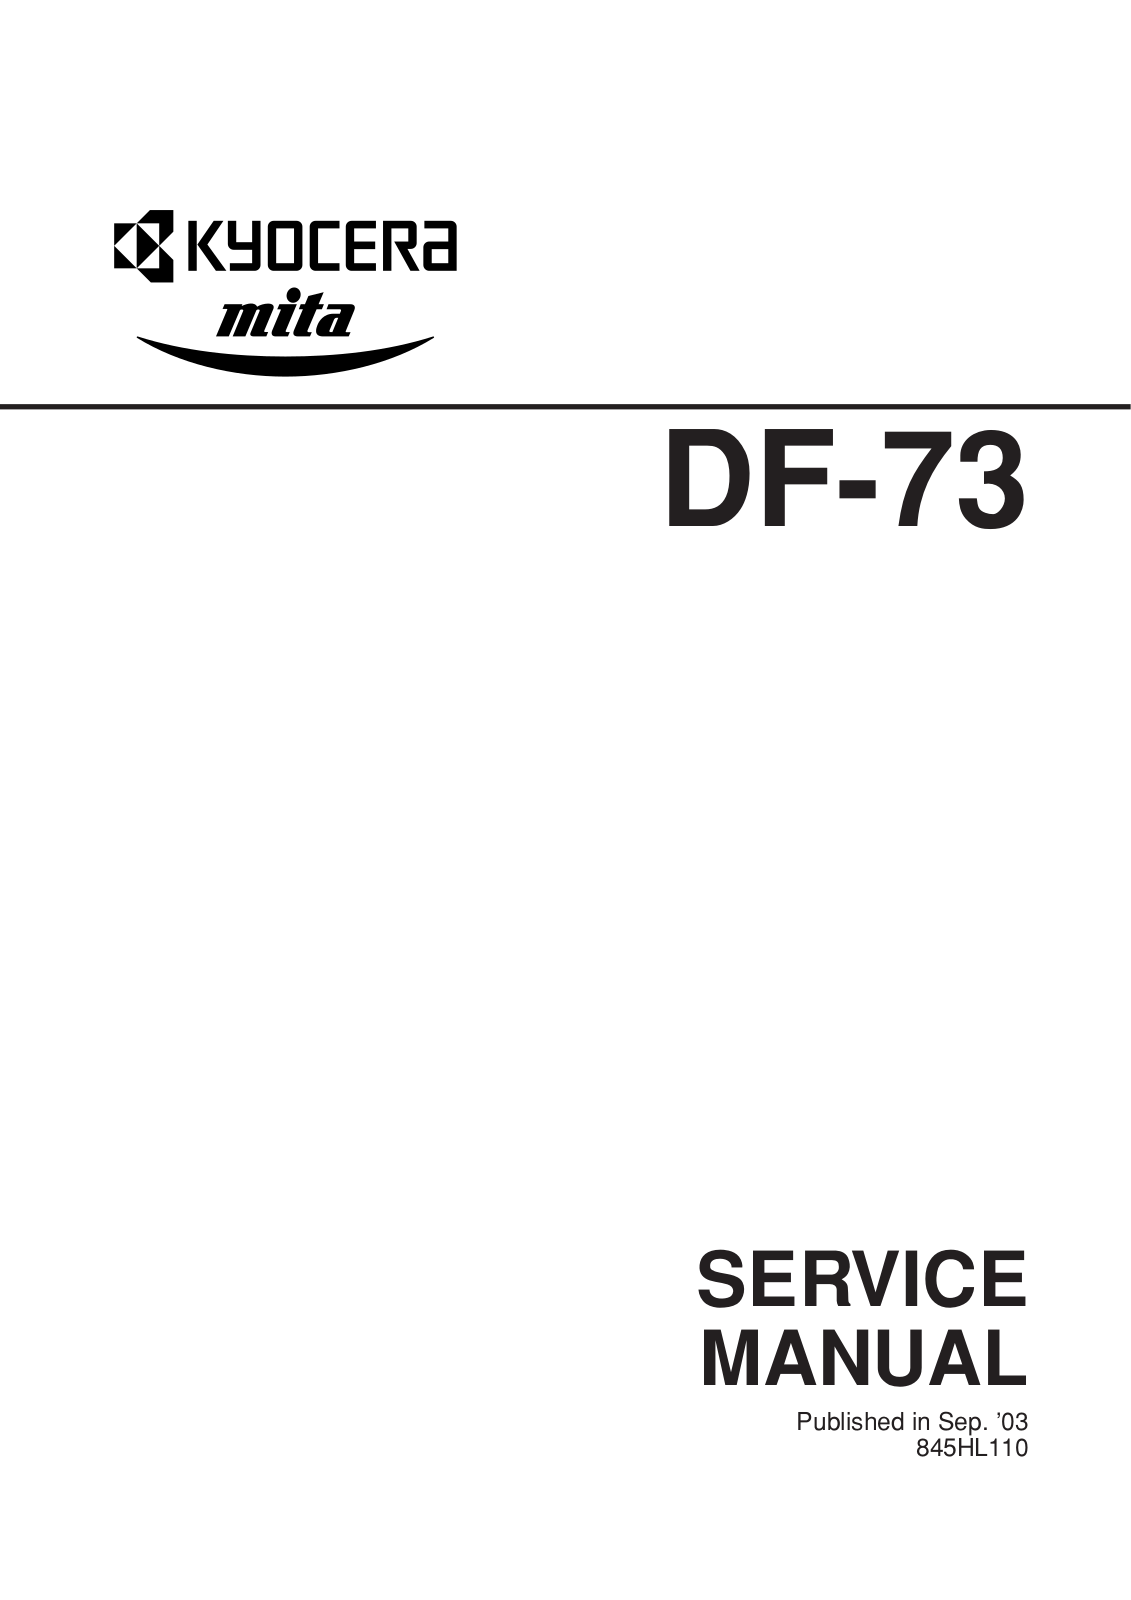 Kyocera DF-73 Service Manual